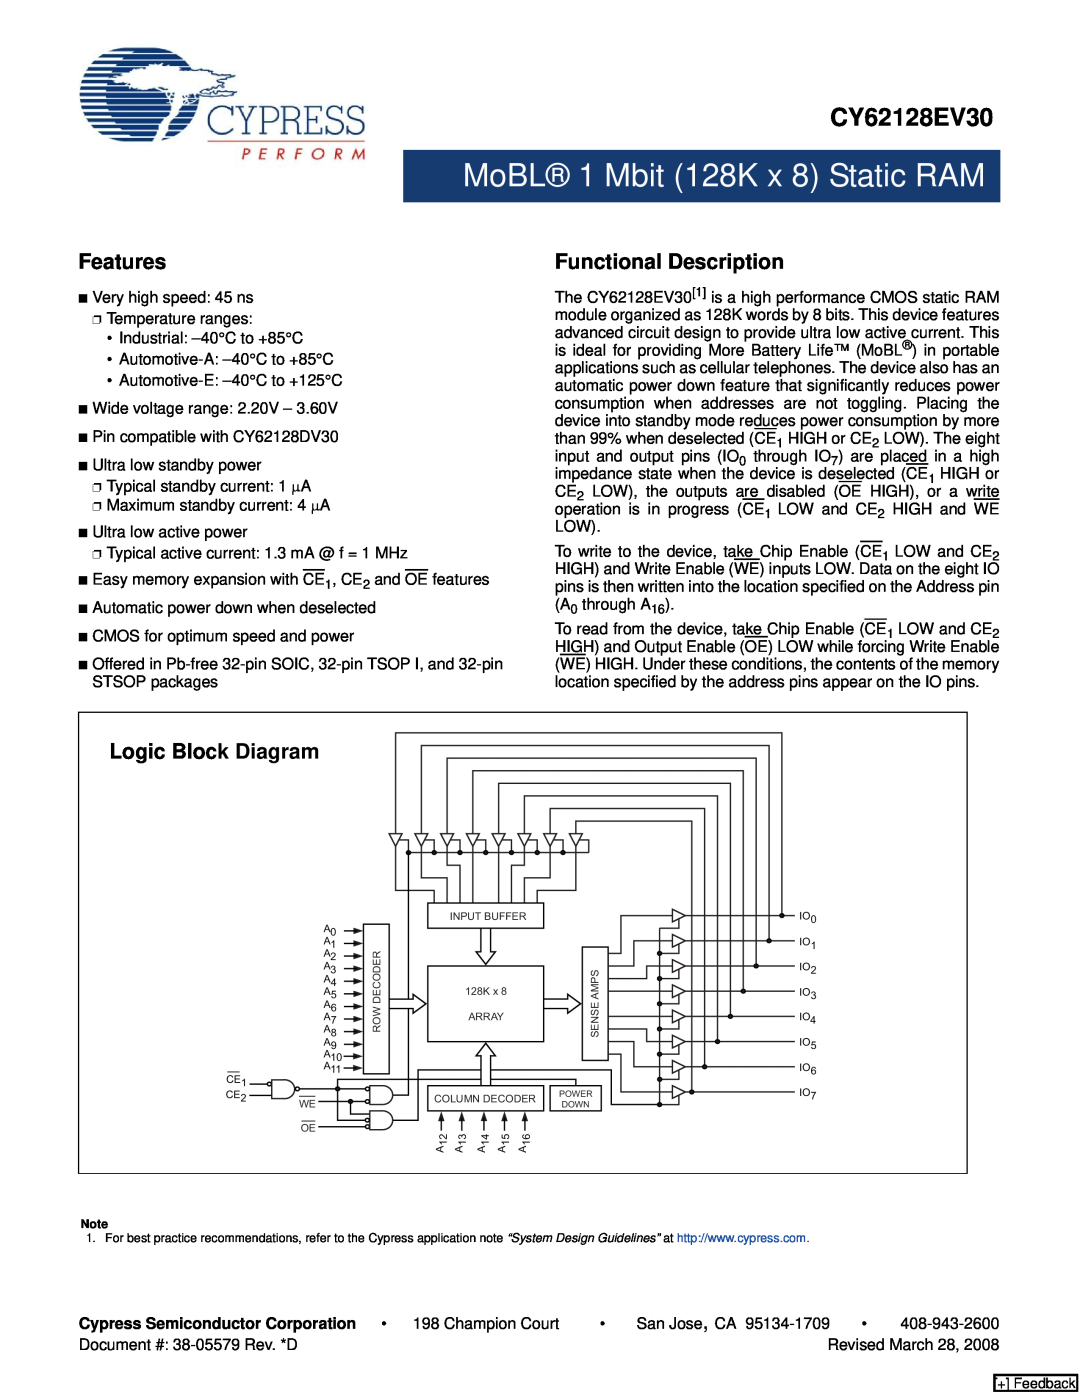 Cypress CY62128EV30 manual Features, Functional Description, Logic Block Diagram, MoBL 1 Mbit 128K x 8 Static RAM 